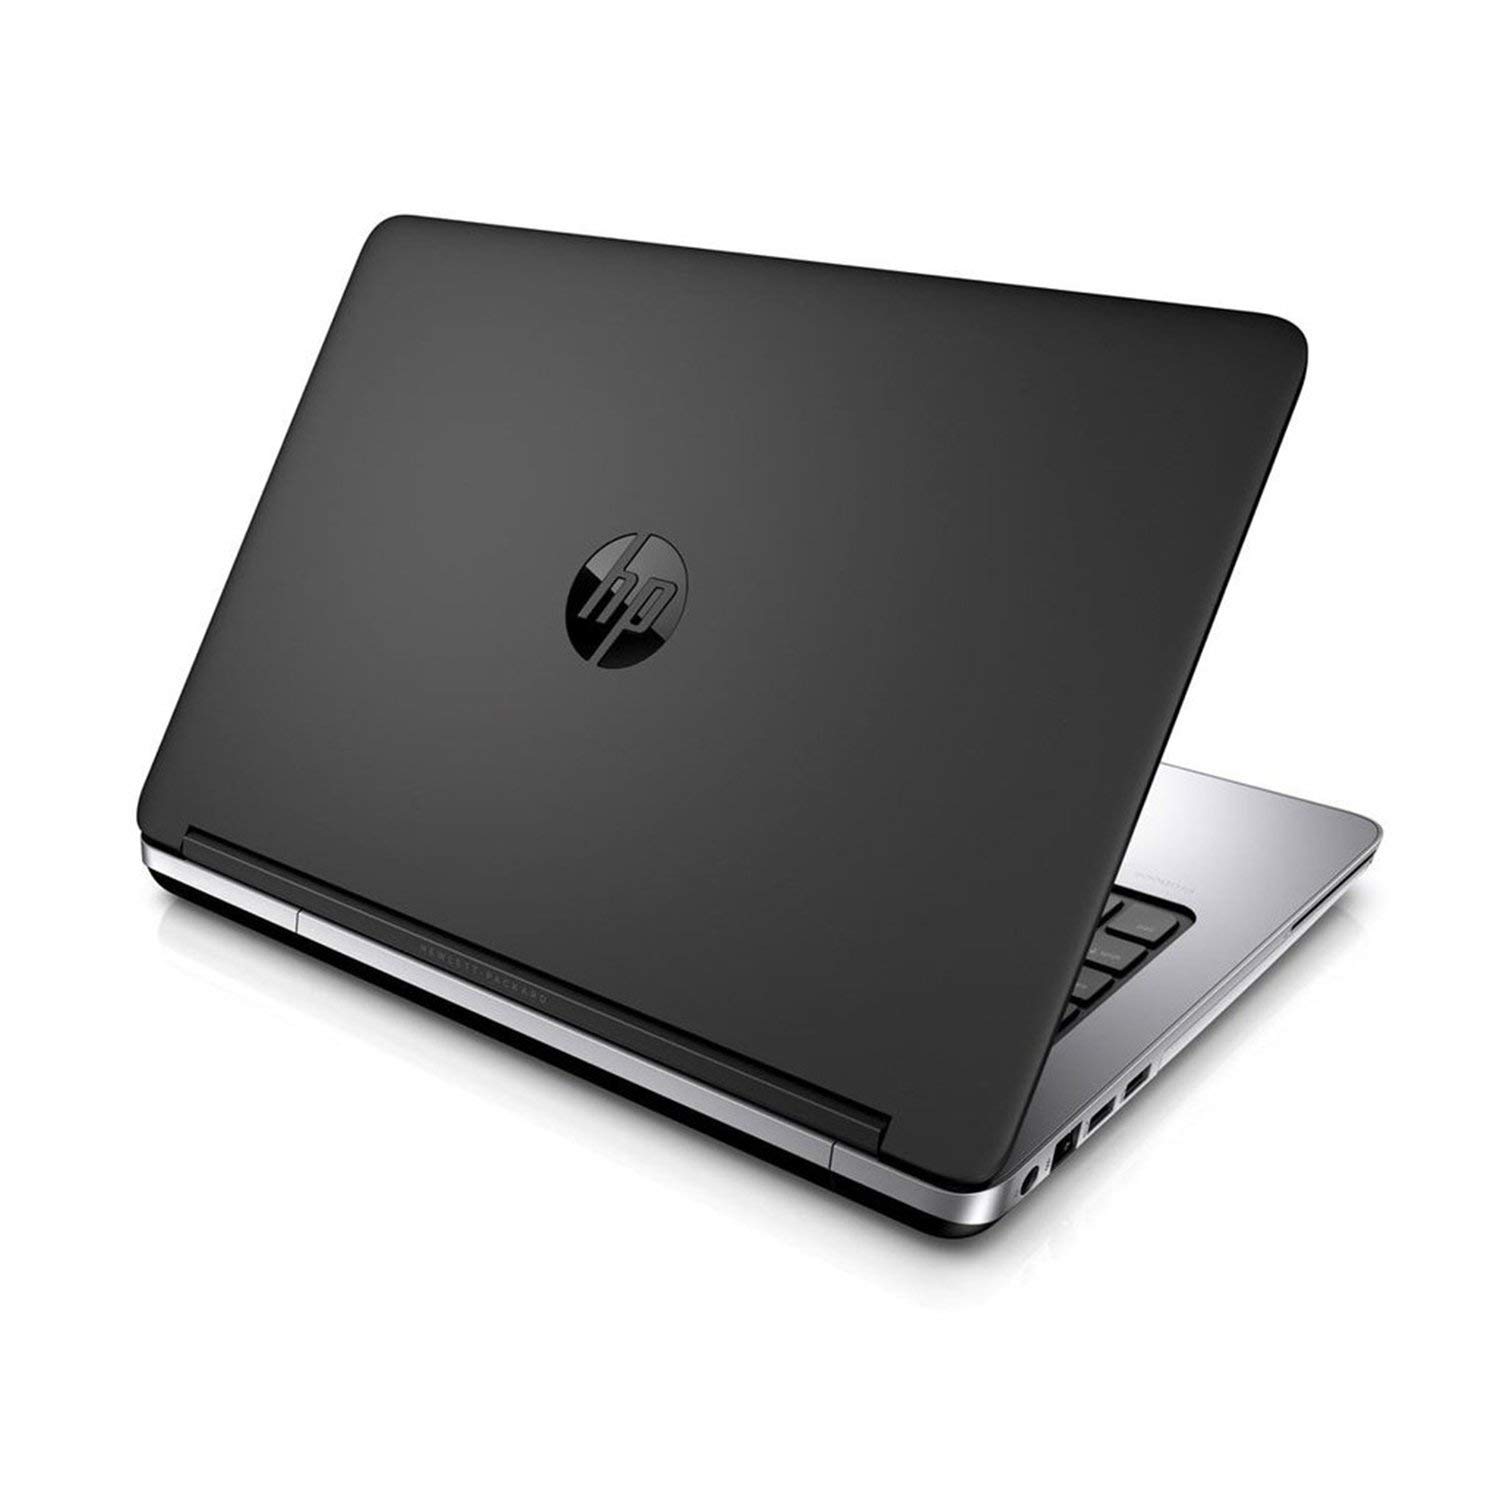 HP Laptop ProBook 640 G1 Intel Core i5-4200M 2.50GHz 4GB 320GB HDD Win 10 Home